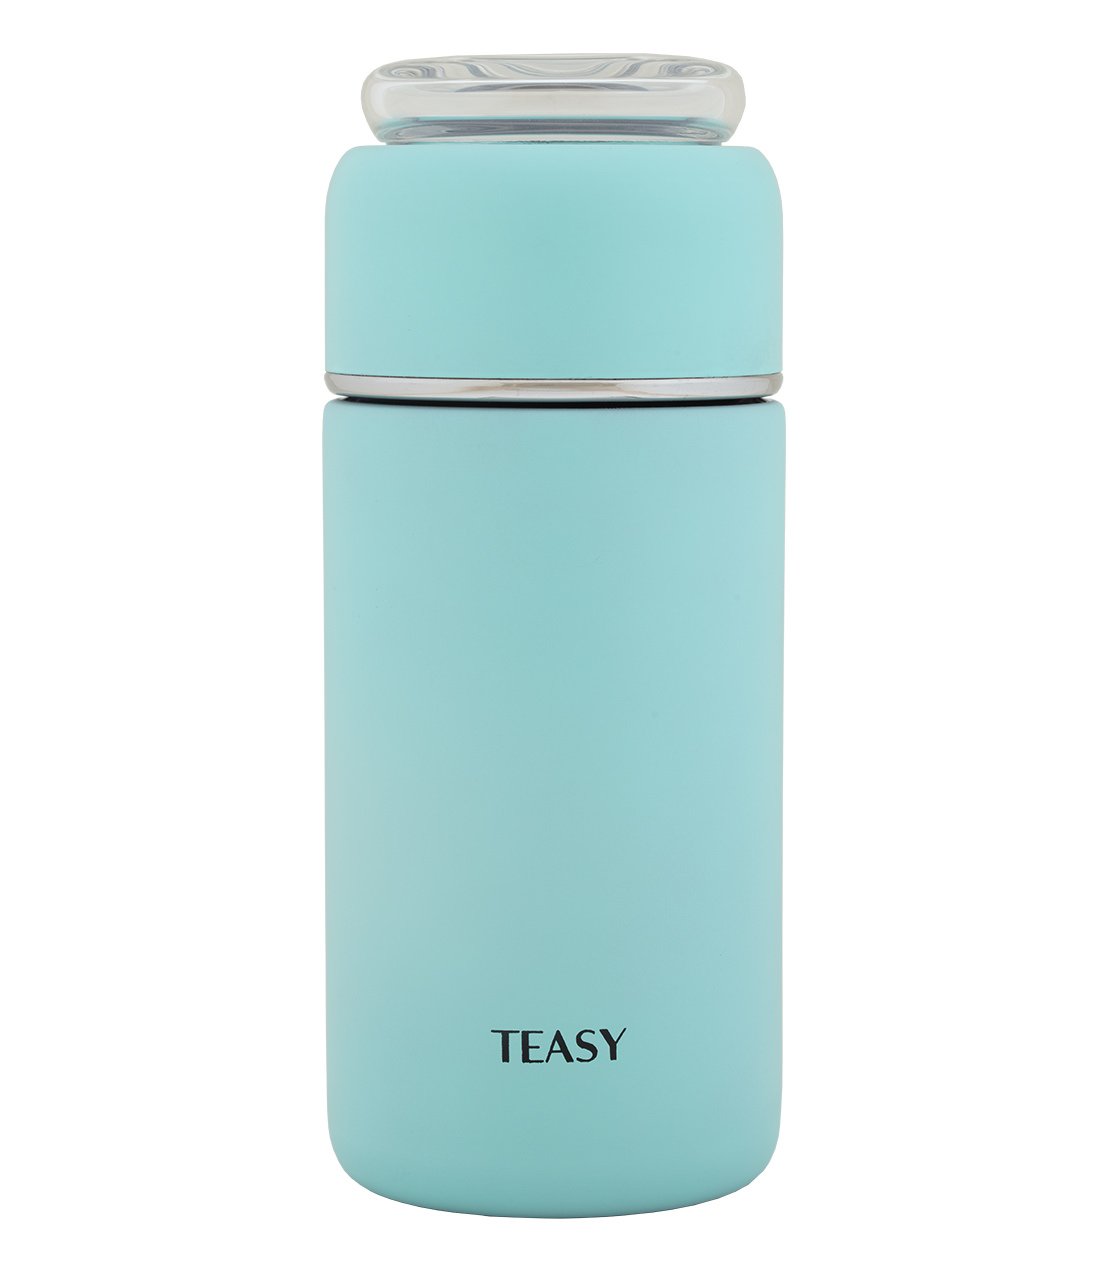 Teasy Insulated Flask (Multiple Colors) - 9 oz. Aqua Teal - Harney & Sons Fine Teas